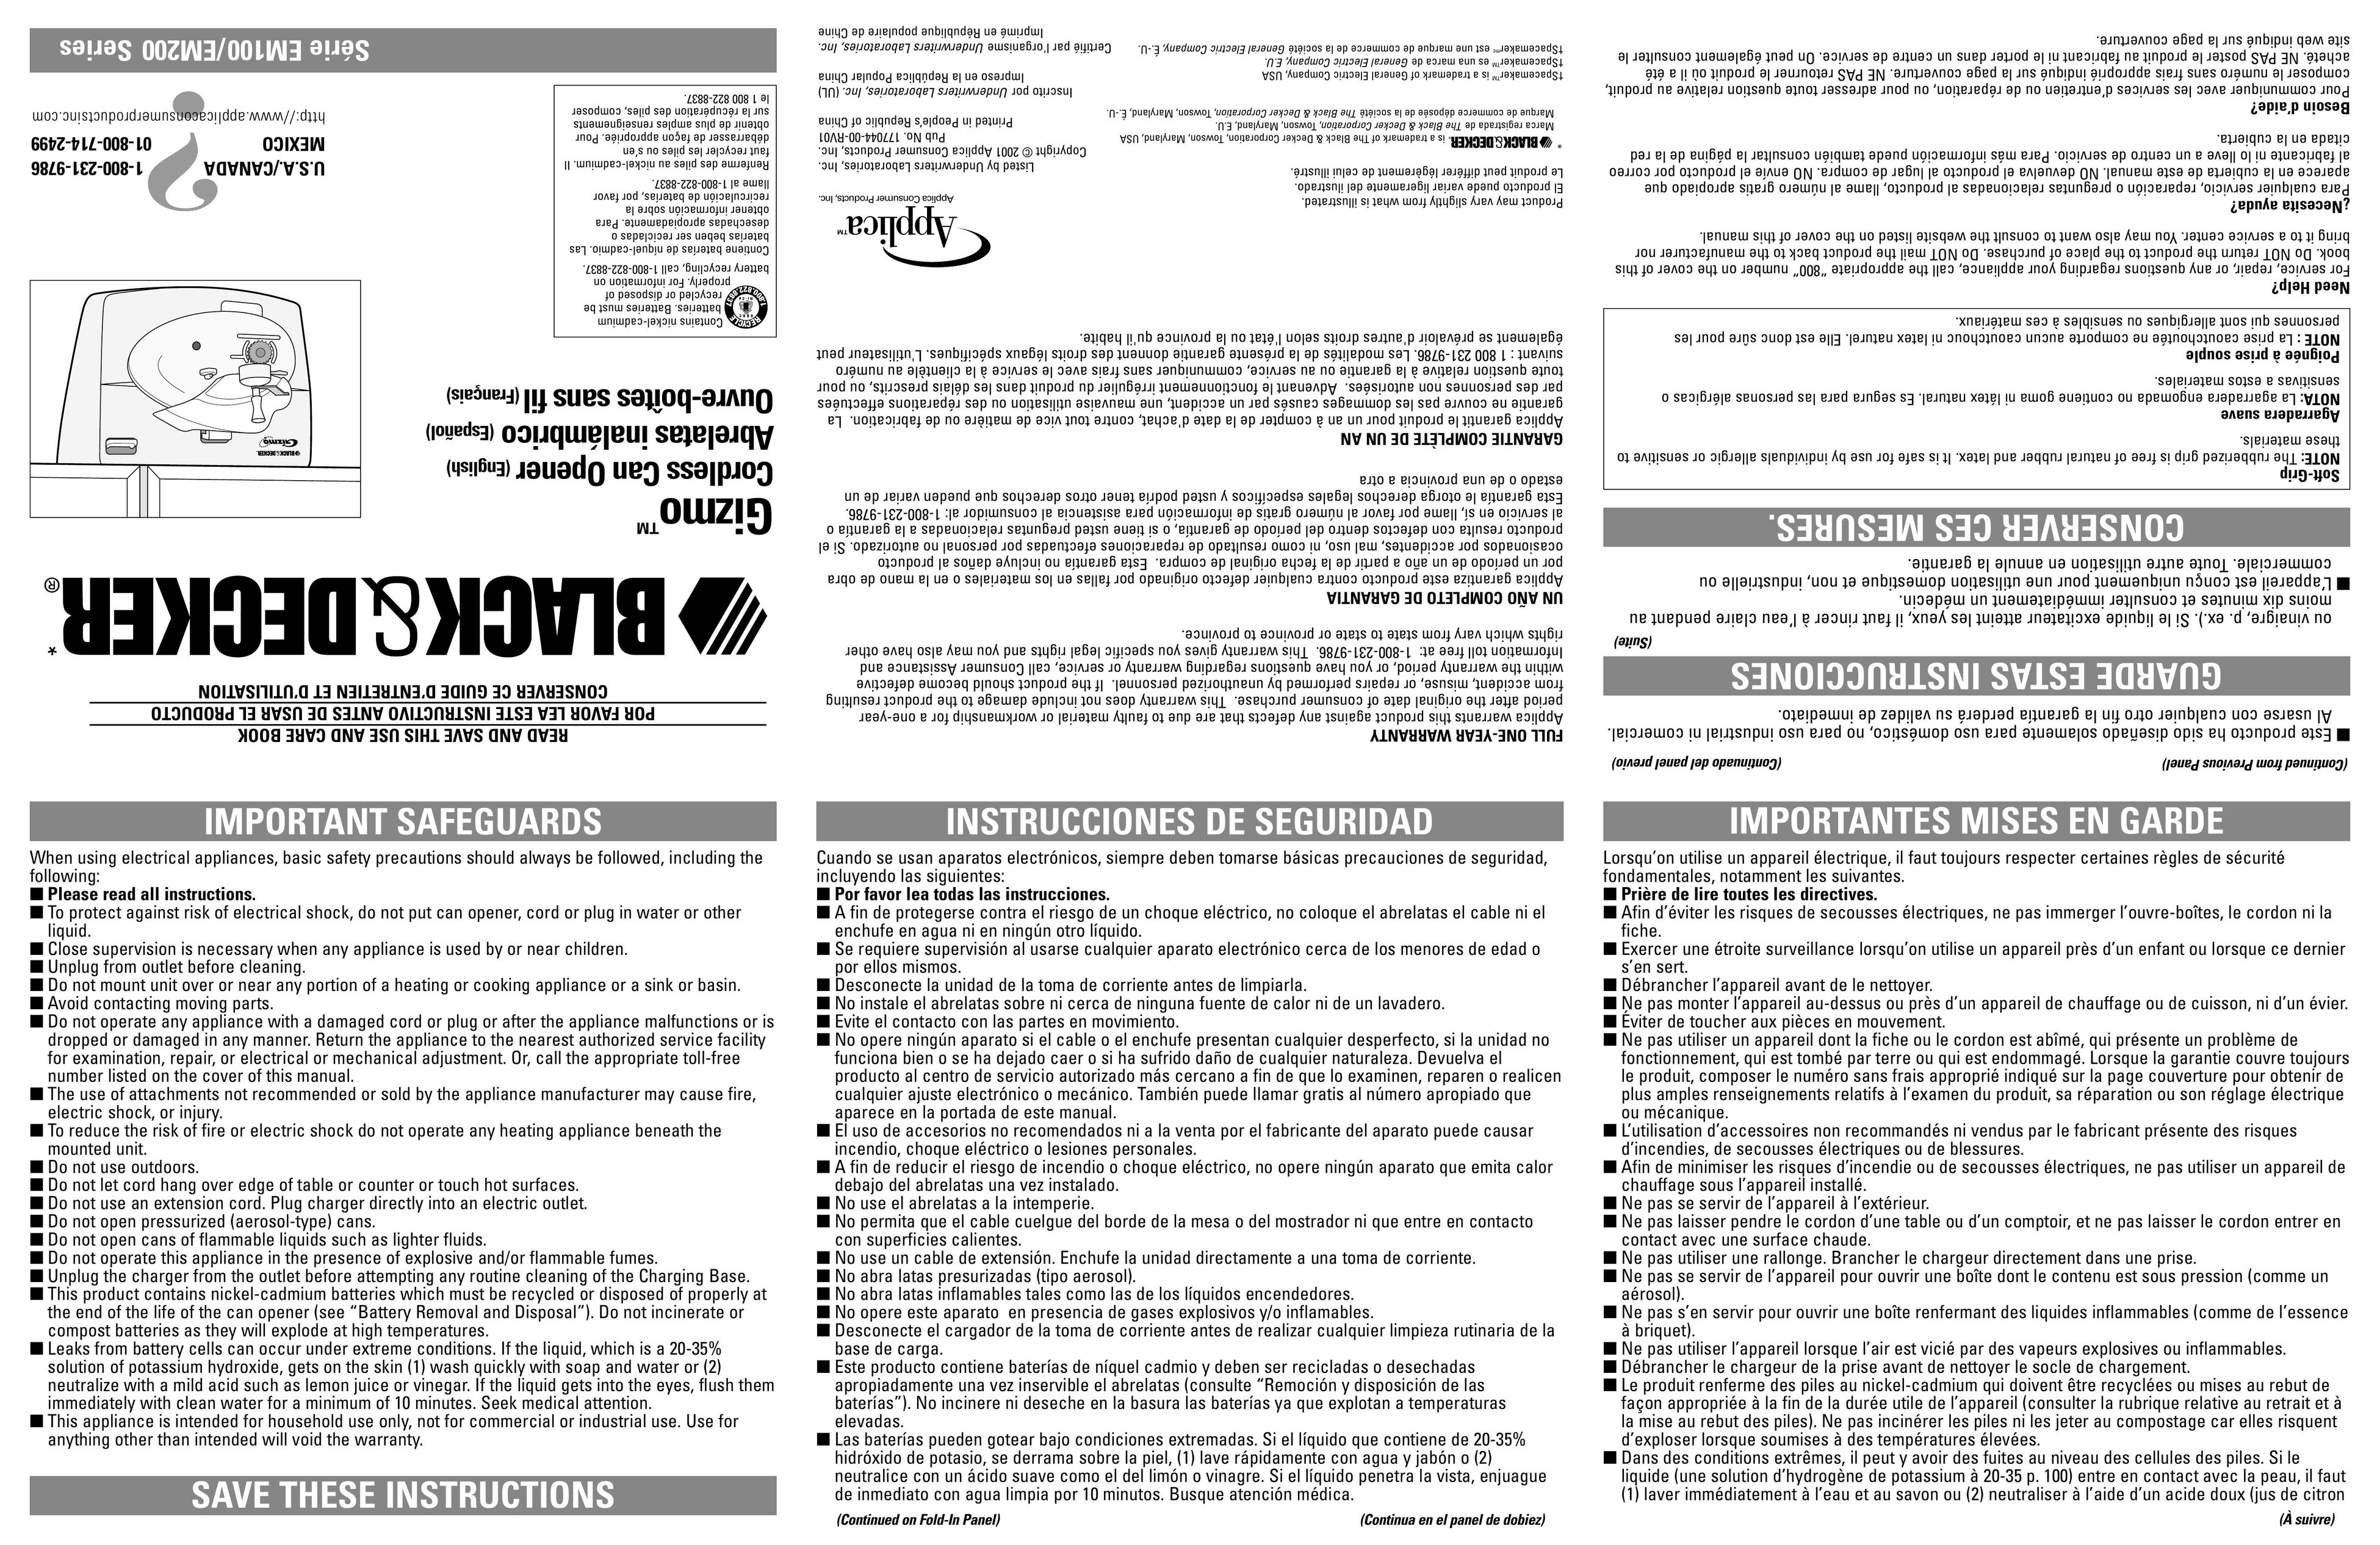 Black & Decker EM200 Can Opener User Manual